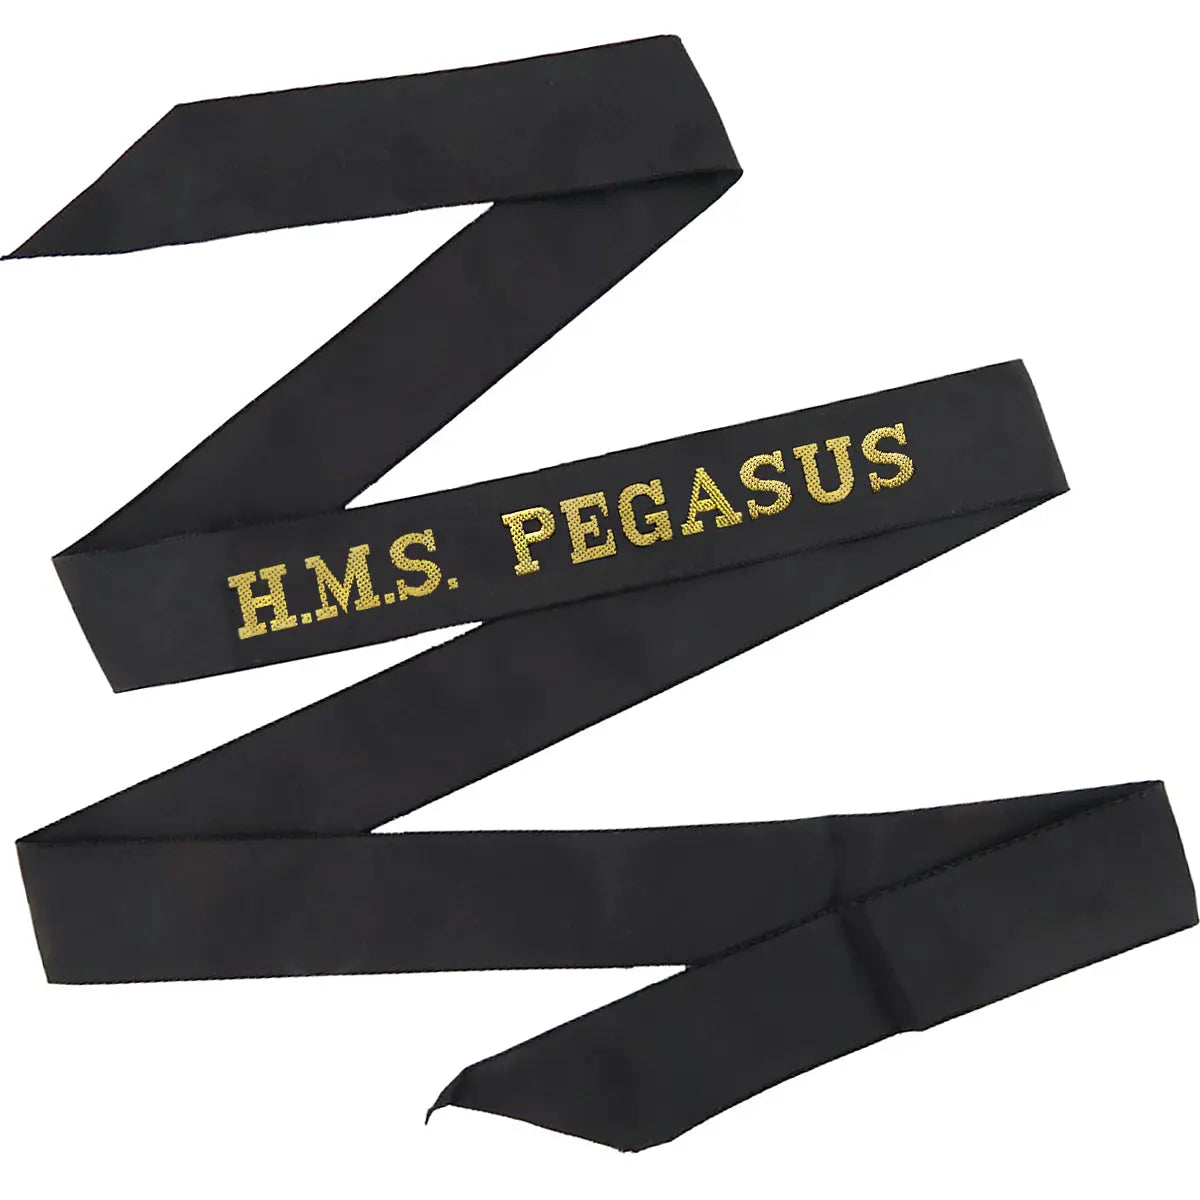 H.M.S Pegasus Cap TallyRoyal Navy wyedean